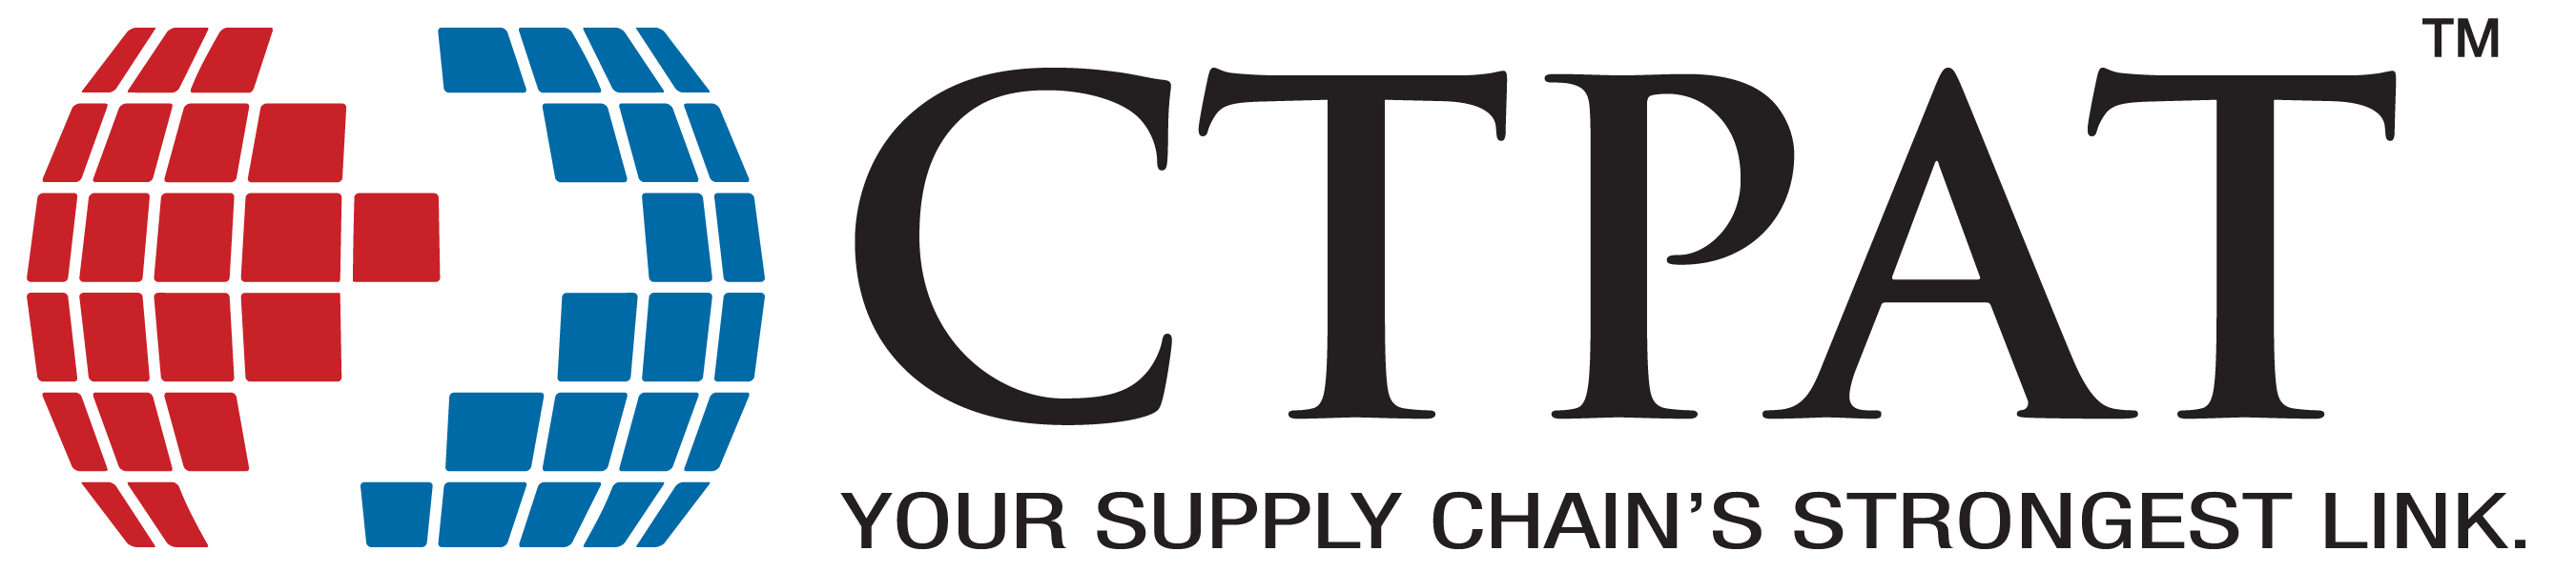 CTPAT certification